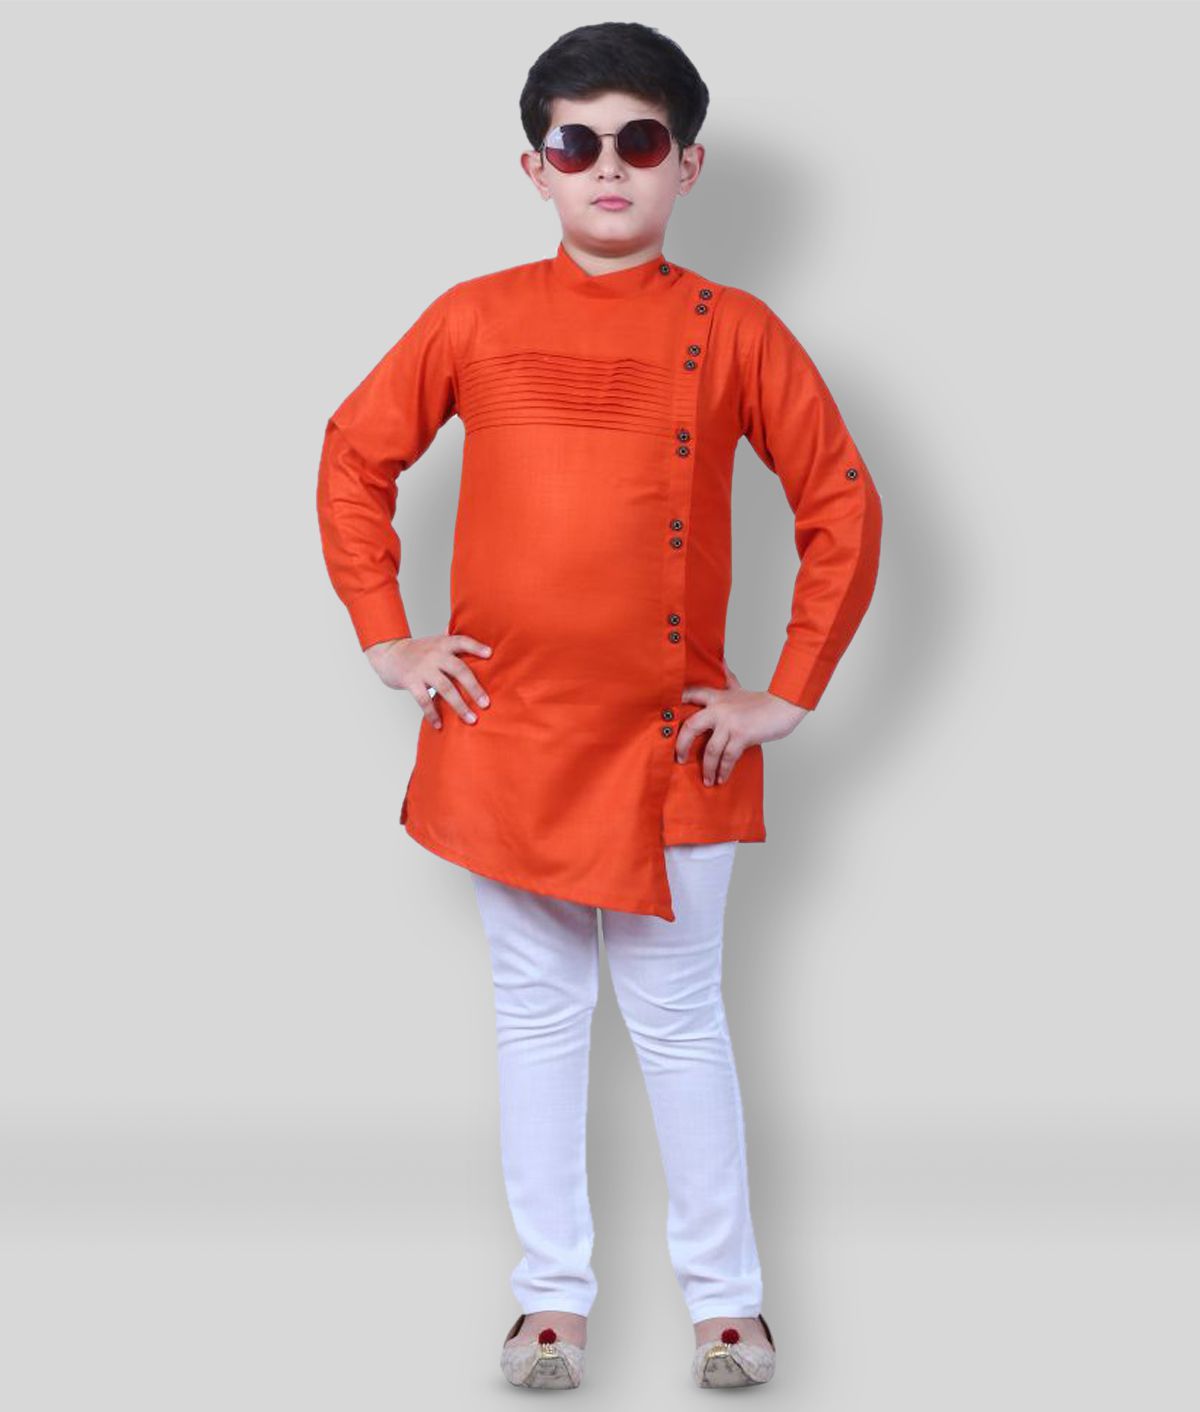     			Joley Poley Ethnic Wear Half Plate Cotton Kurta with Pyjama for Kids and Boys